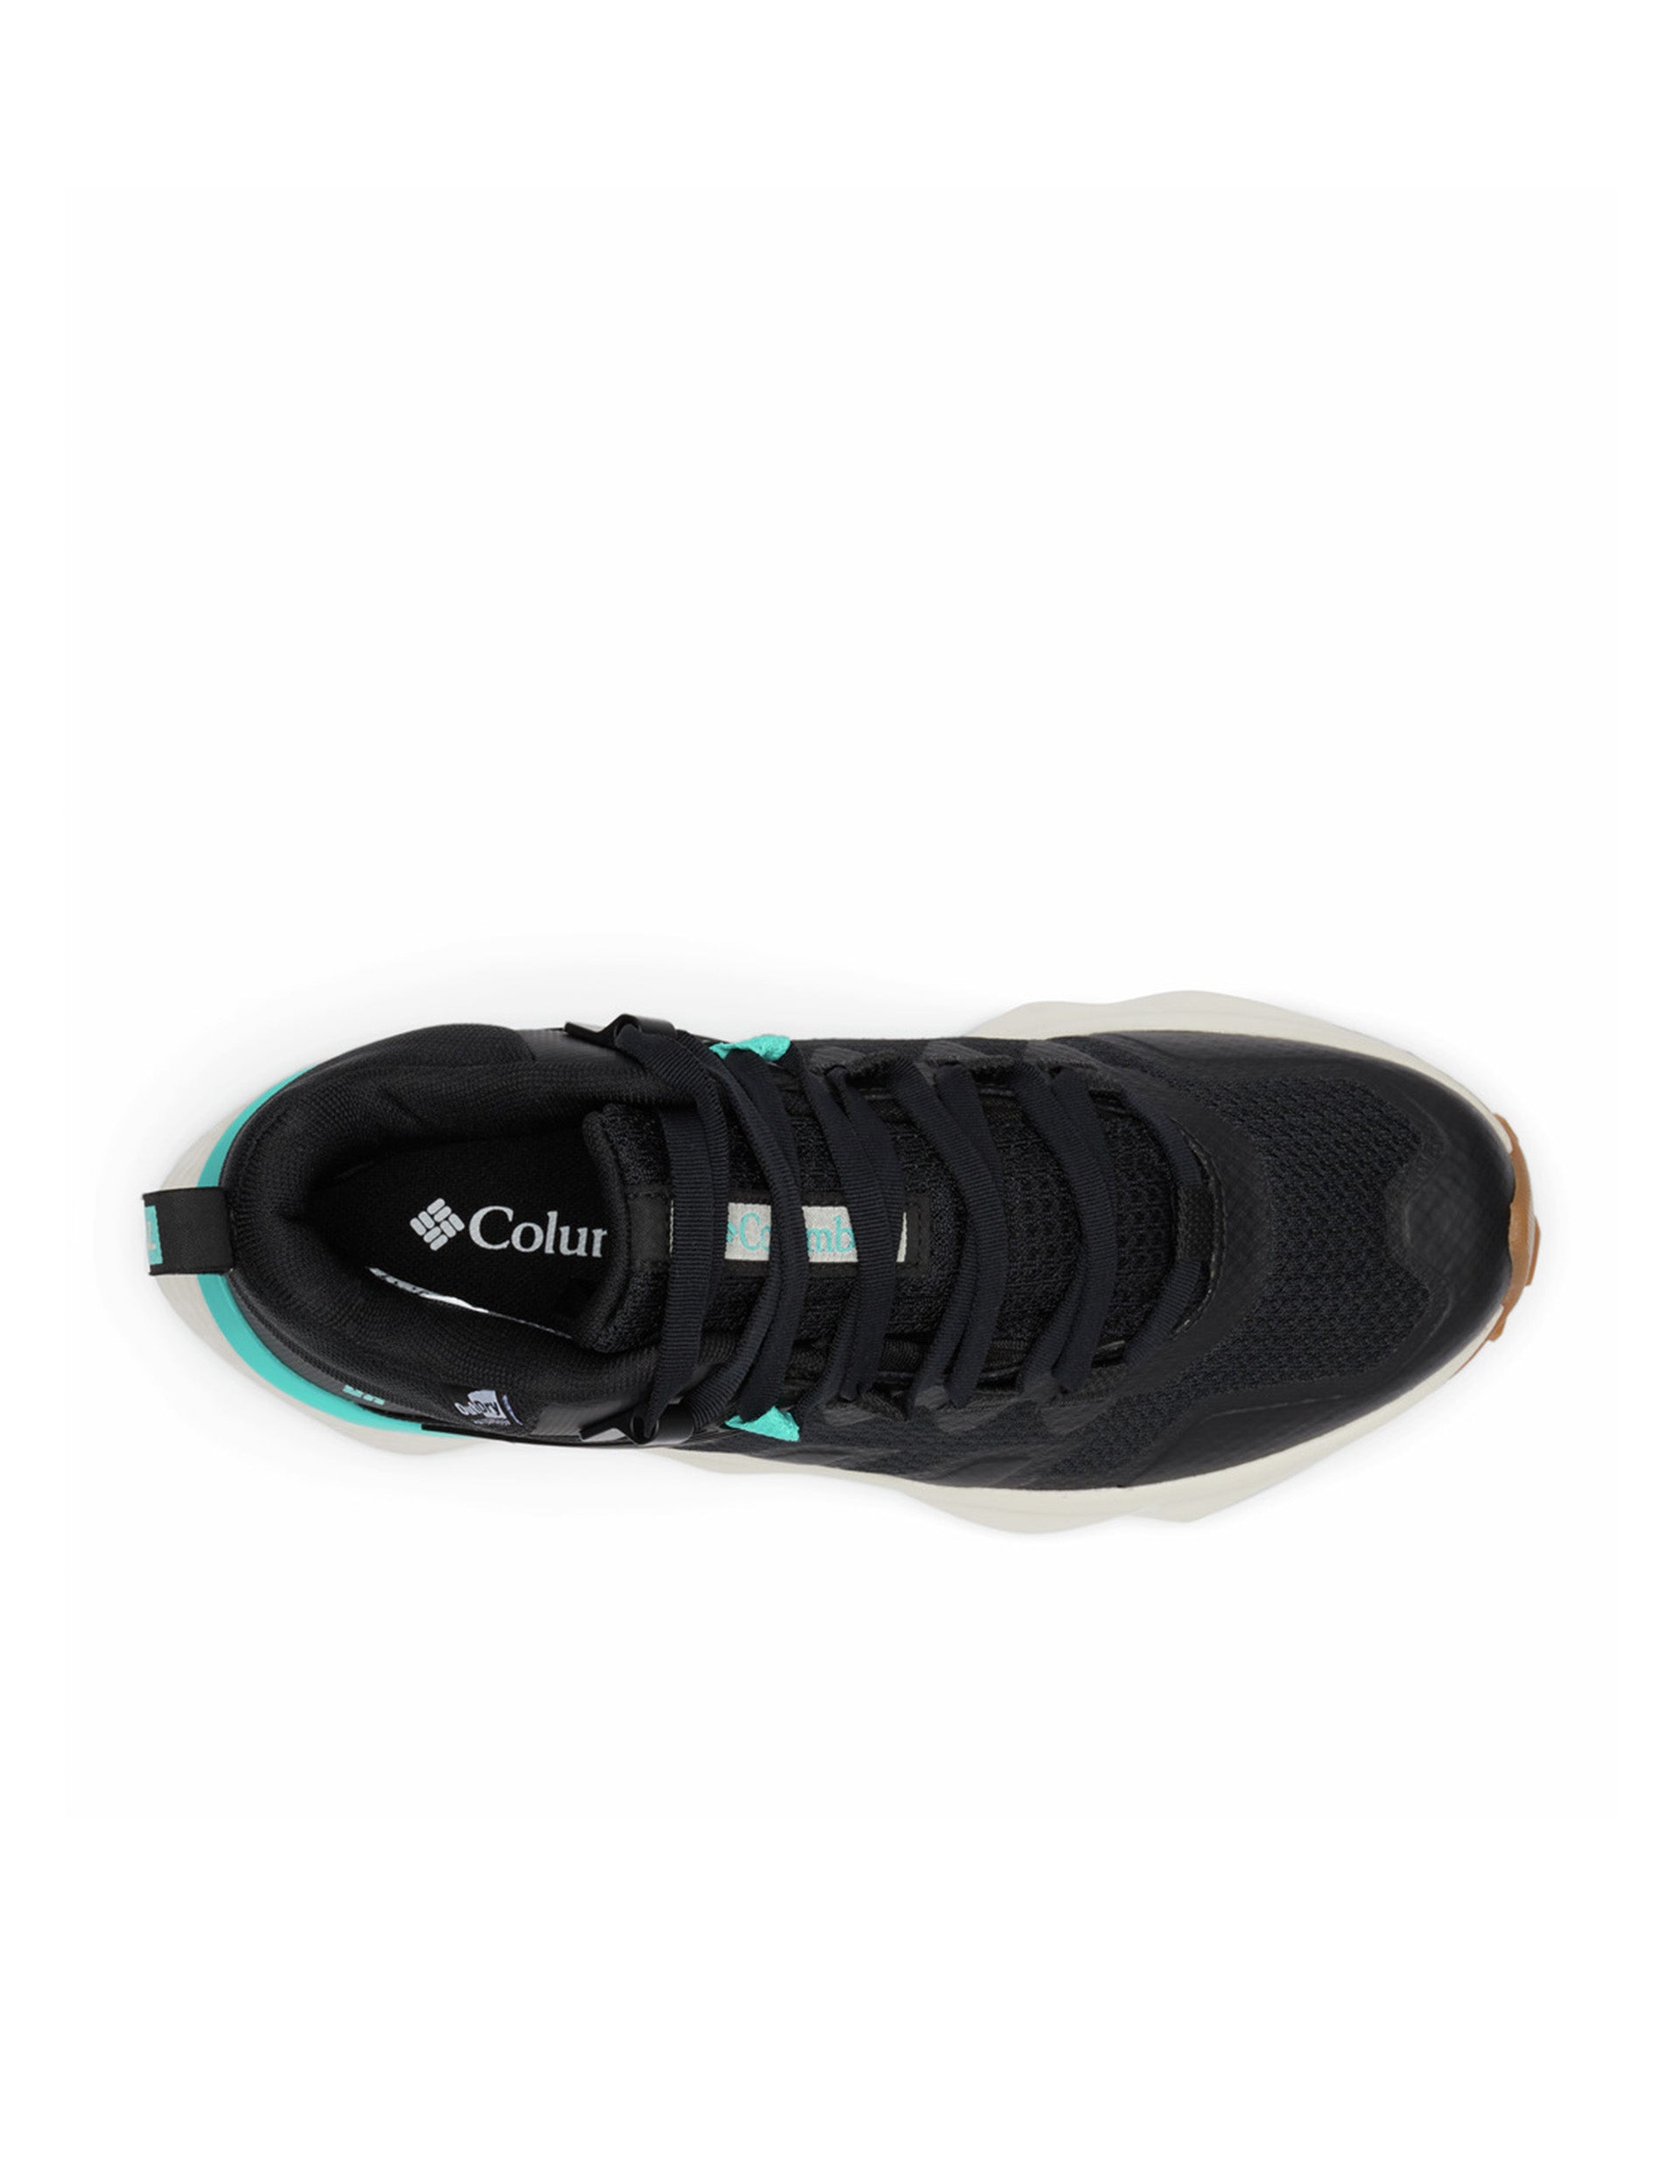 Columbia, Facet 75 Mid Outdry Shoe - Black/Aqua